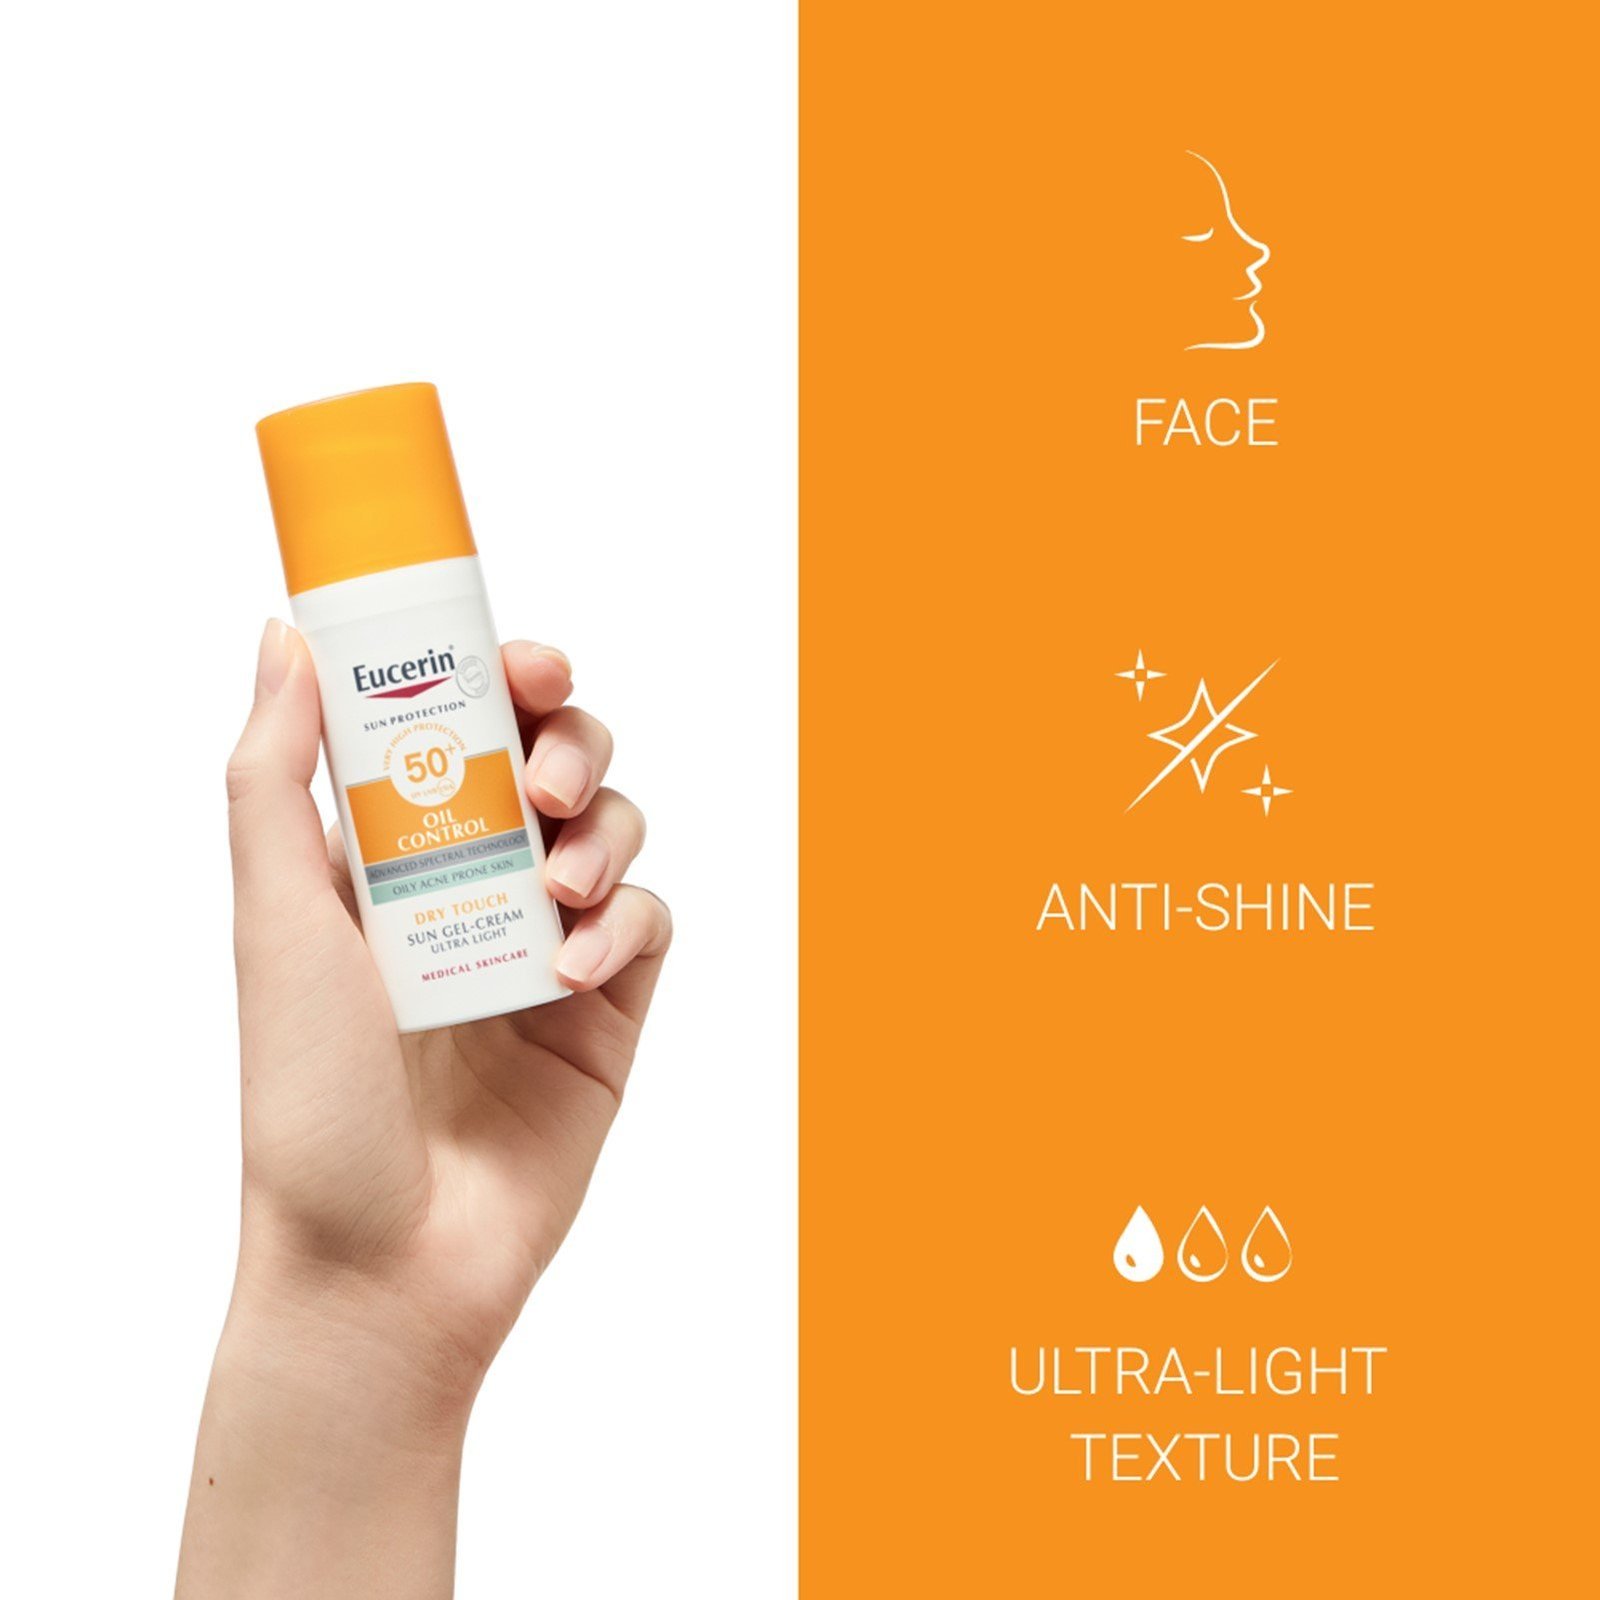 Eucerin Sun Face Oil Control Gel-Cream SPF 50+ 50ml, Make You More Klassy  !